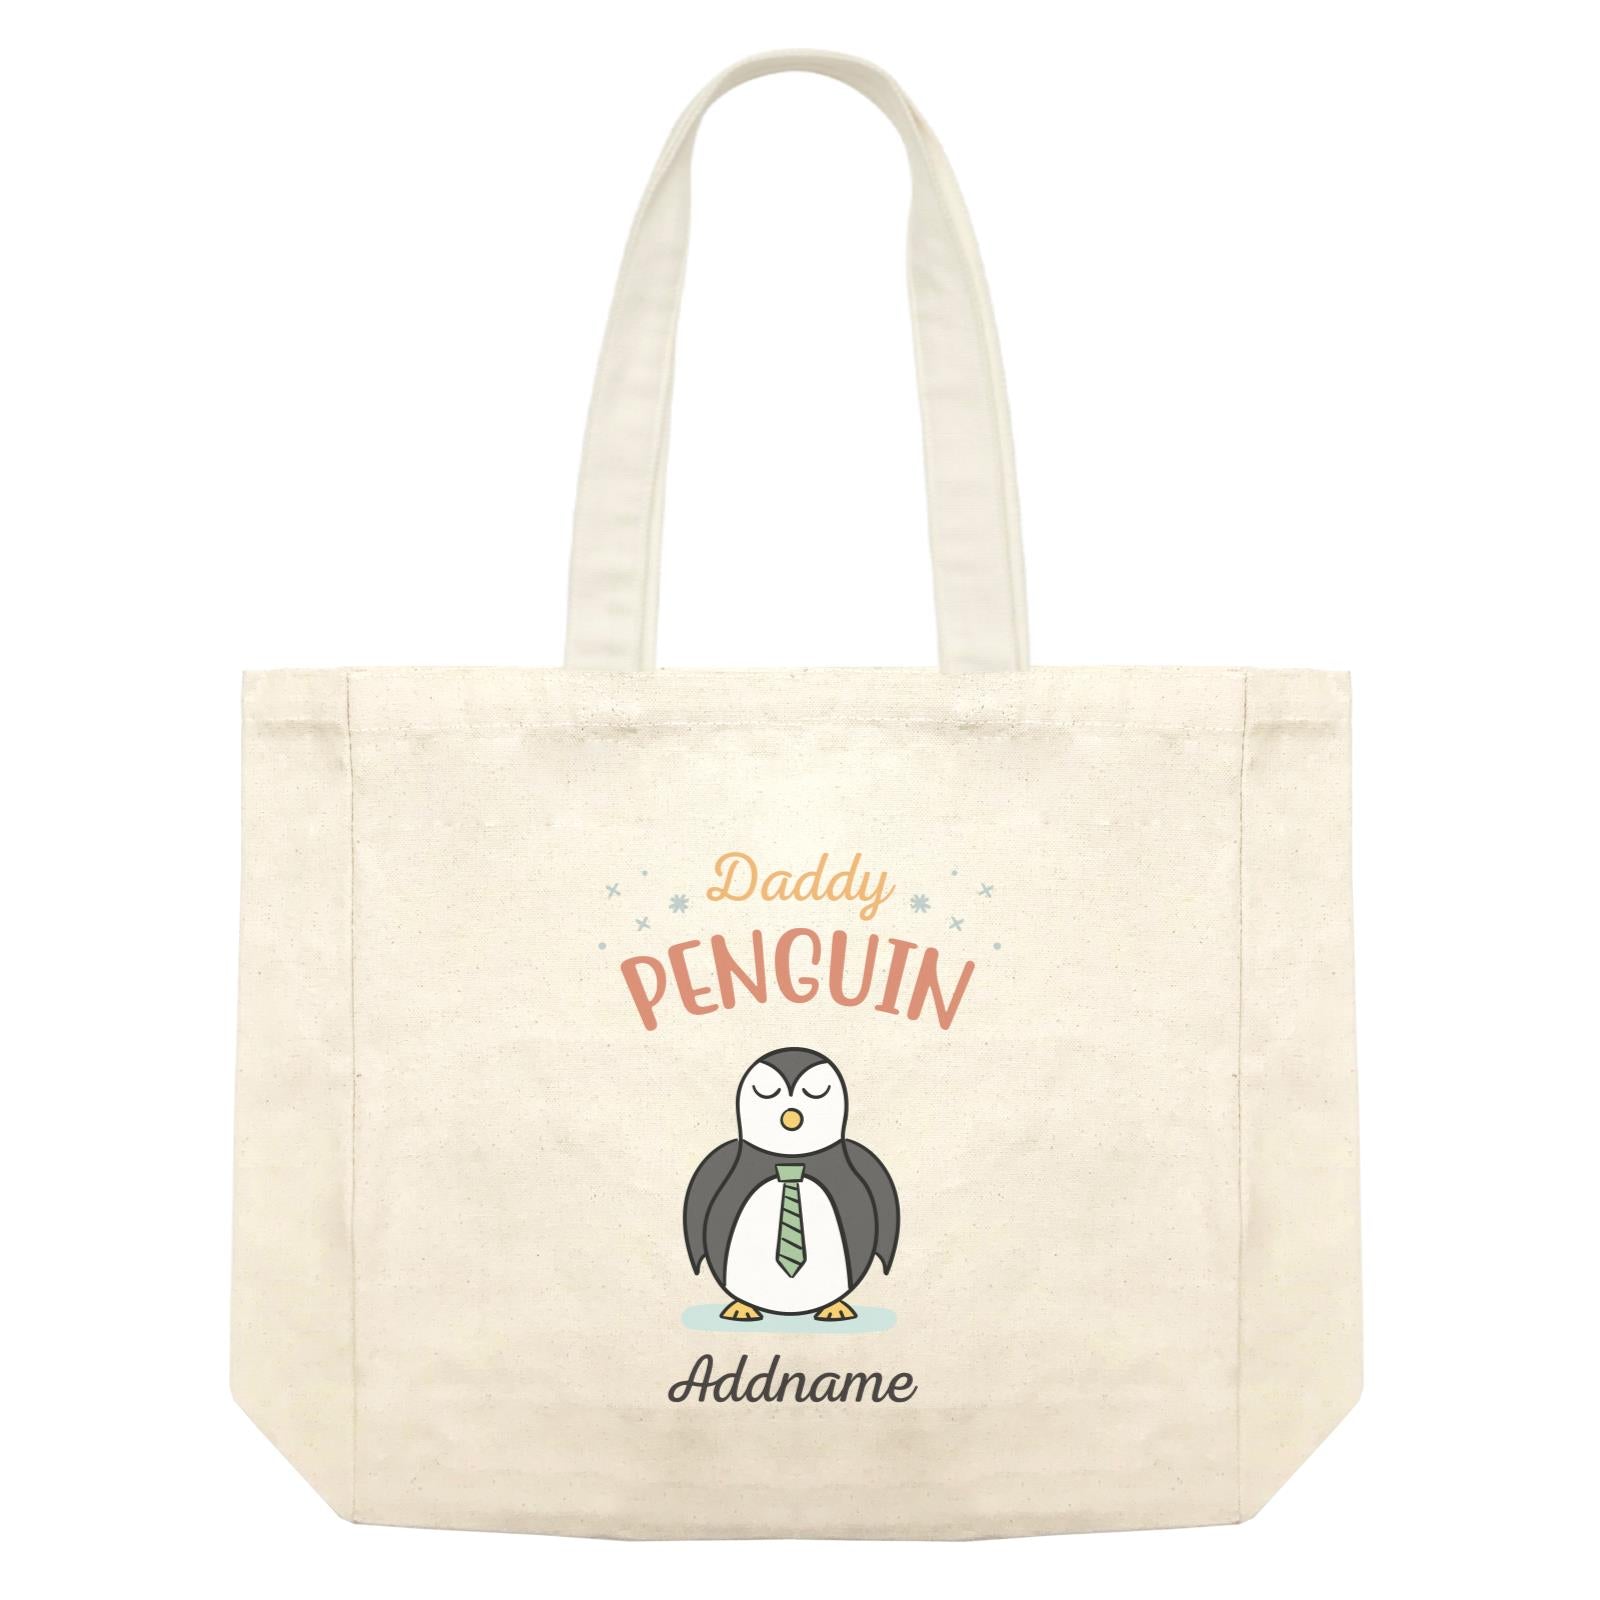 Penguin Family Daddy Penguin Addname Shopping Bag